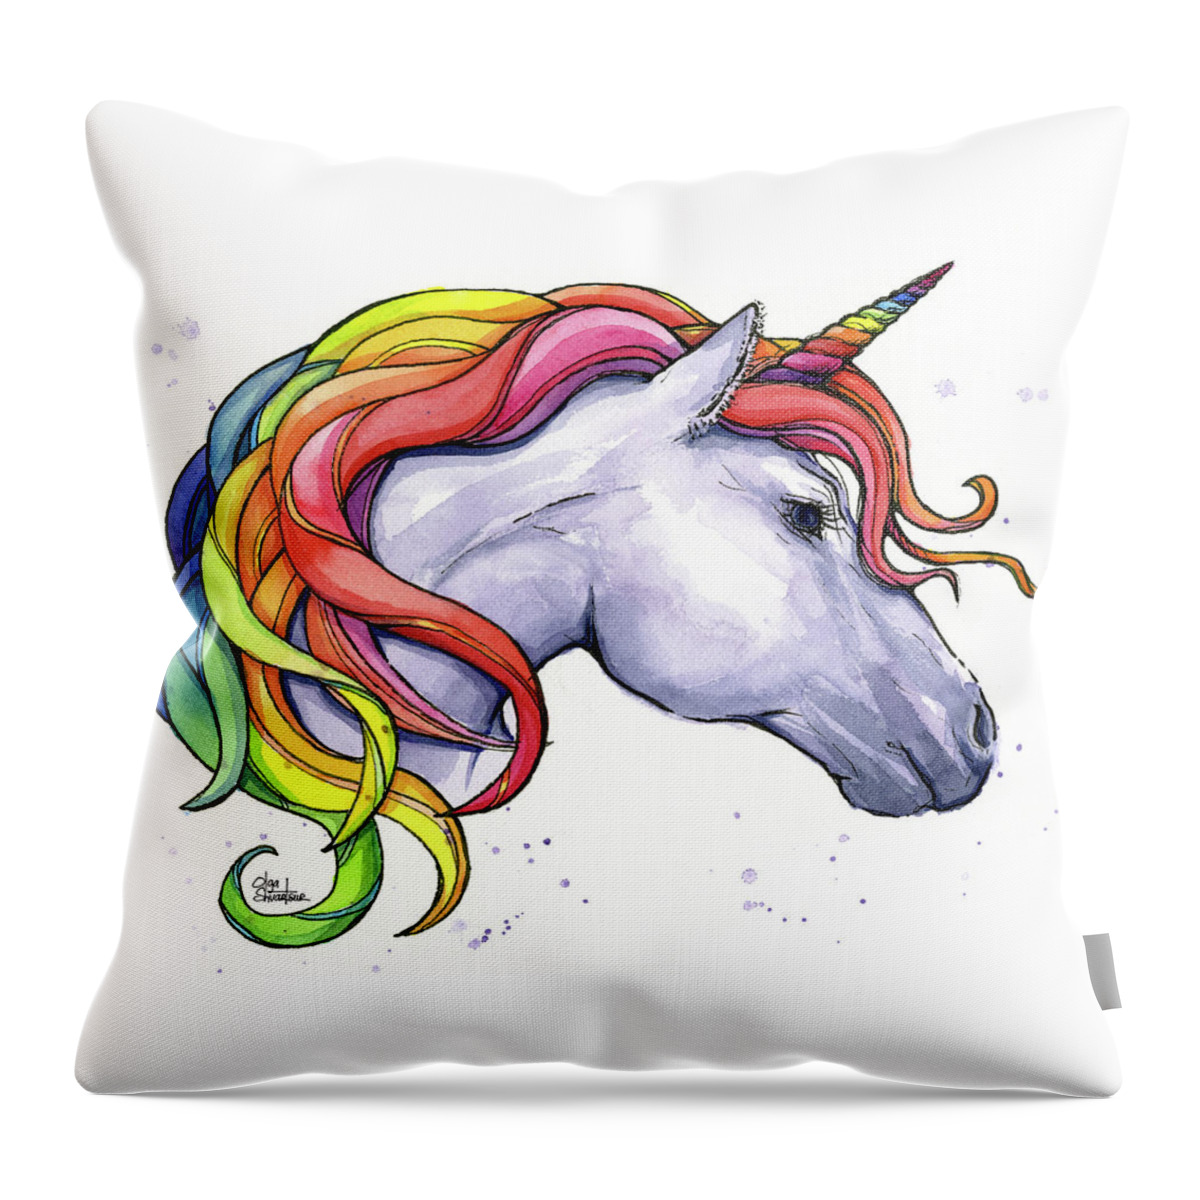 Unicorn Throw Pillow featuring the painting Unicorn With Rainbow Mane by Olga Shvartsur